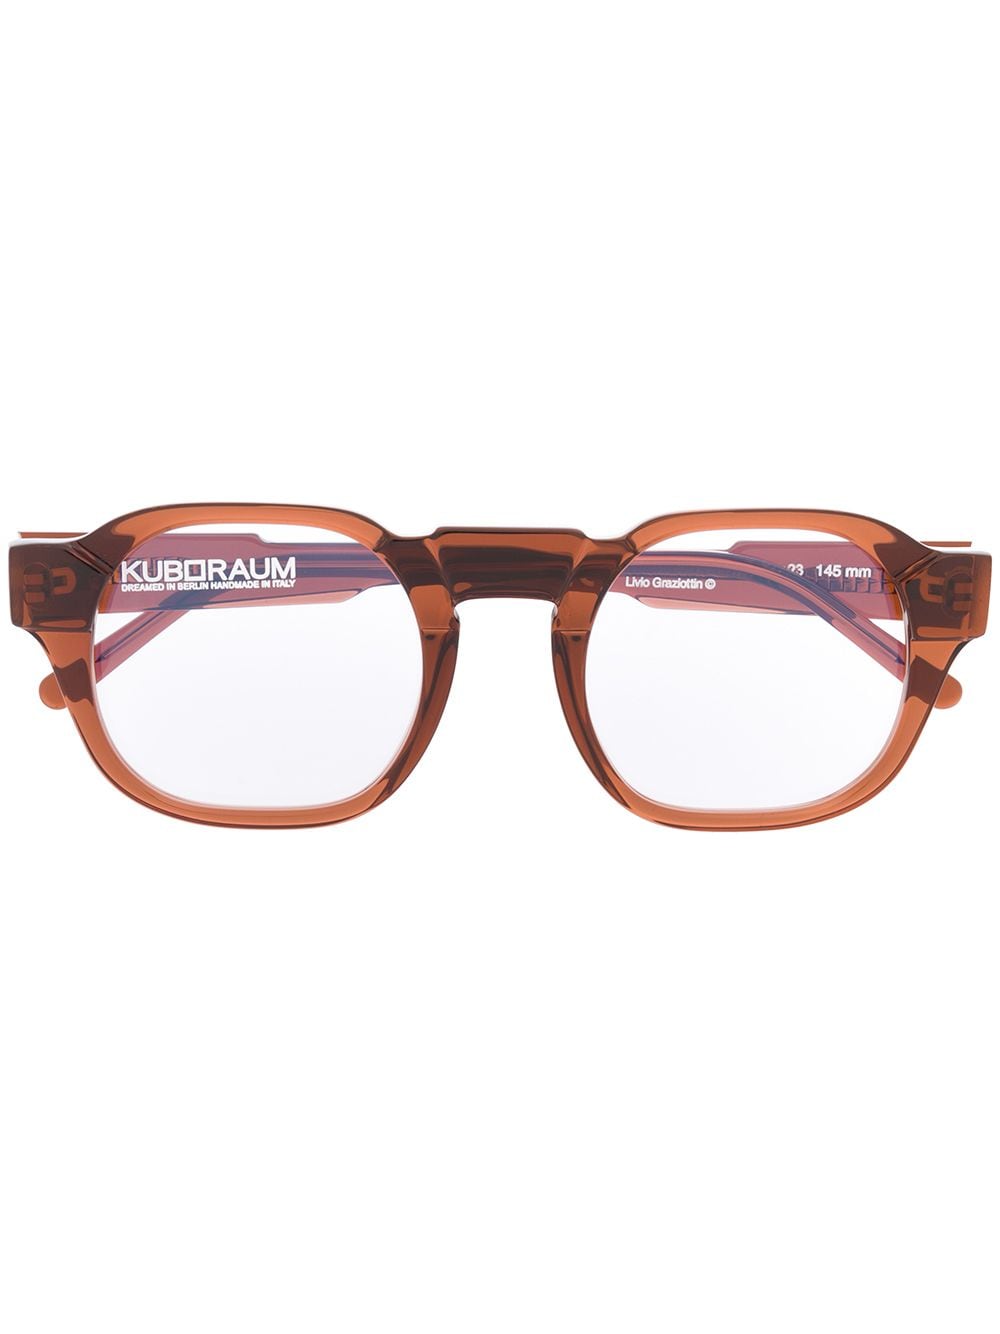 Kuboraum round frame optical glasses - Brown von Kuboraum